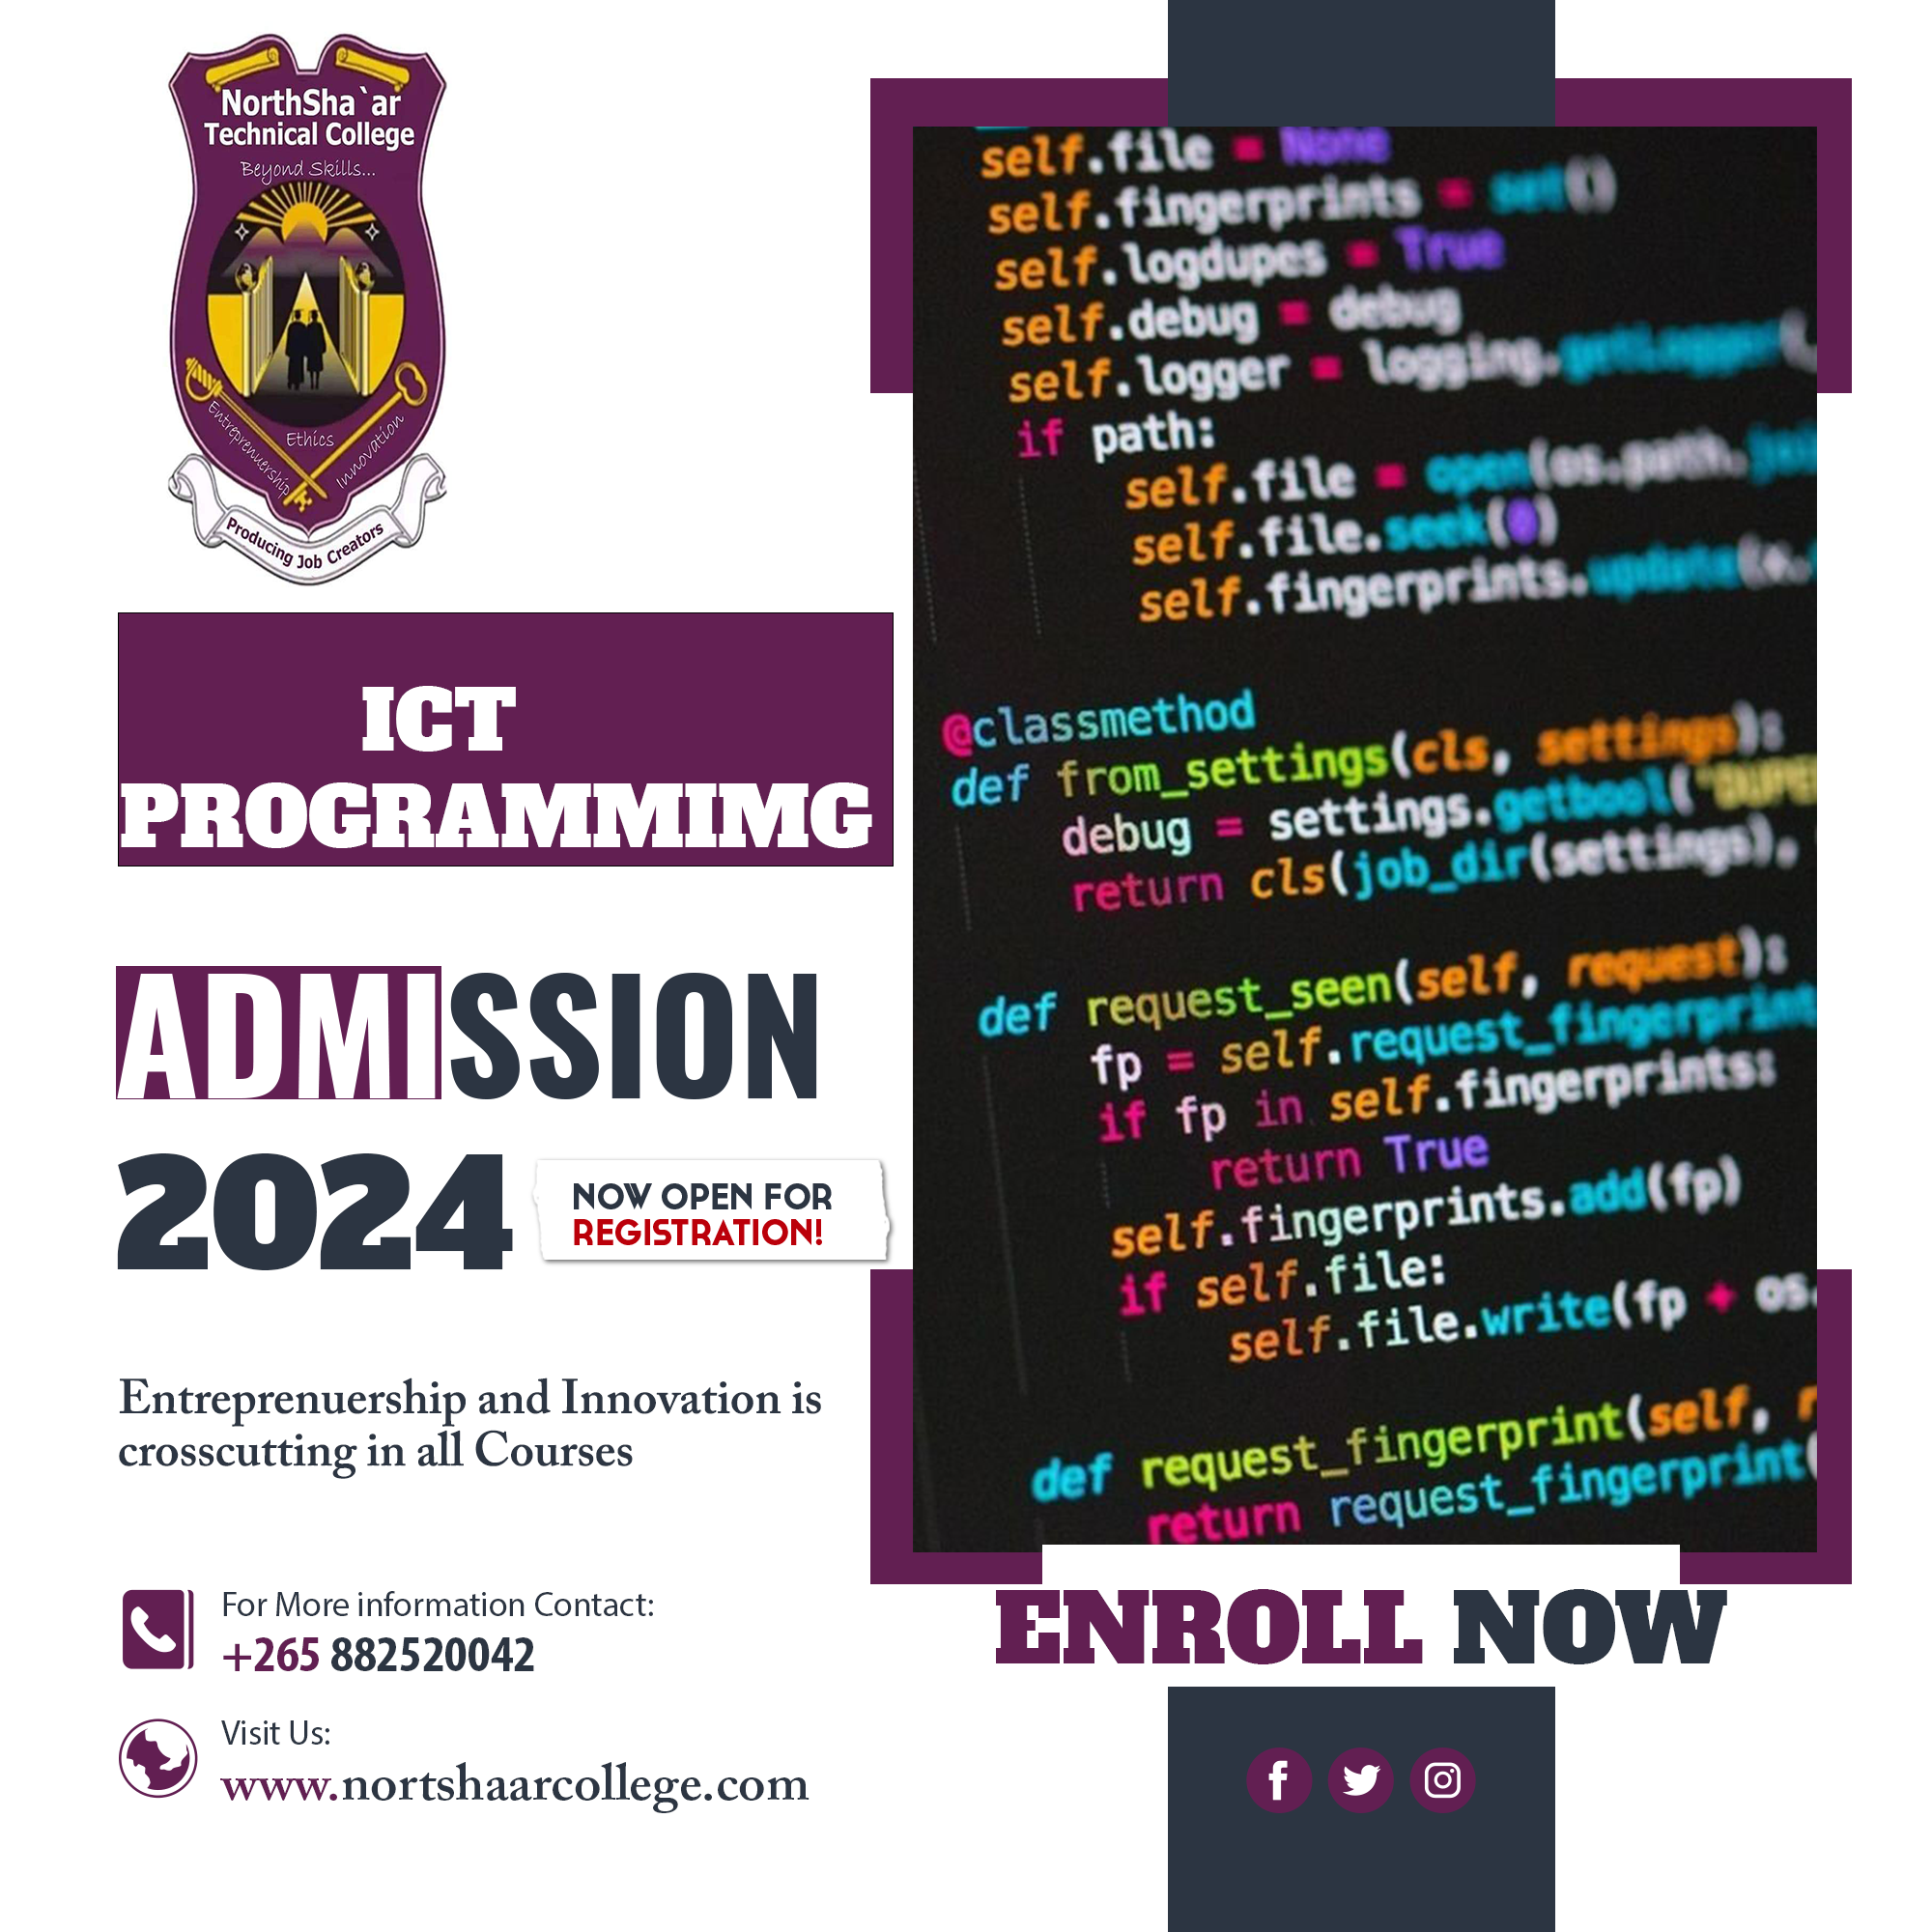 ICT - Programming at NorthSha'ar Technical College 